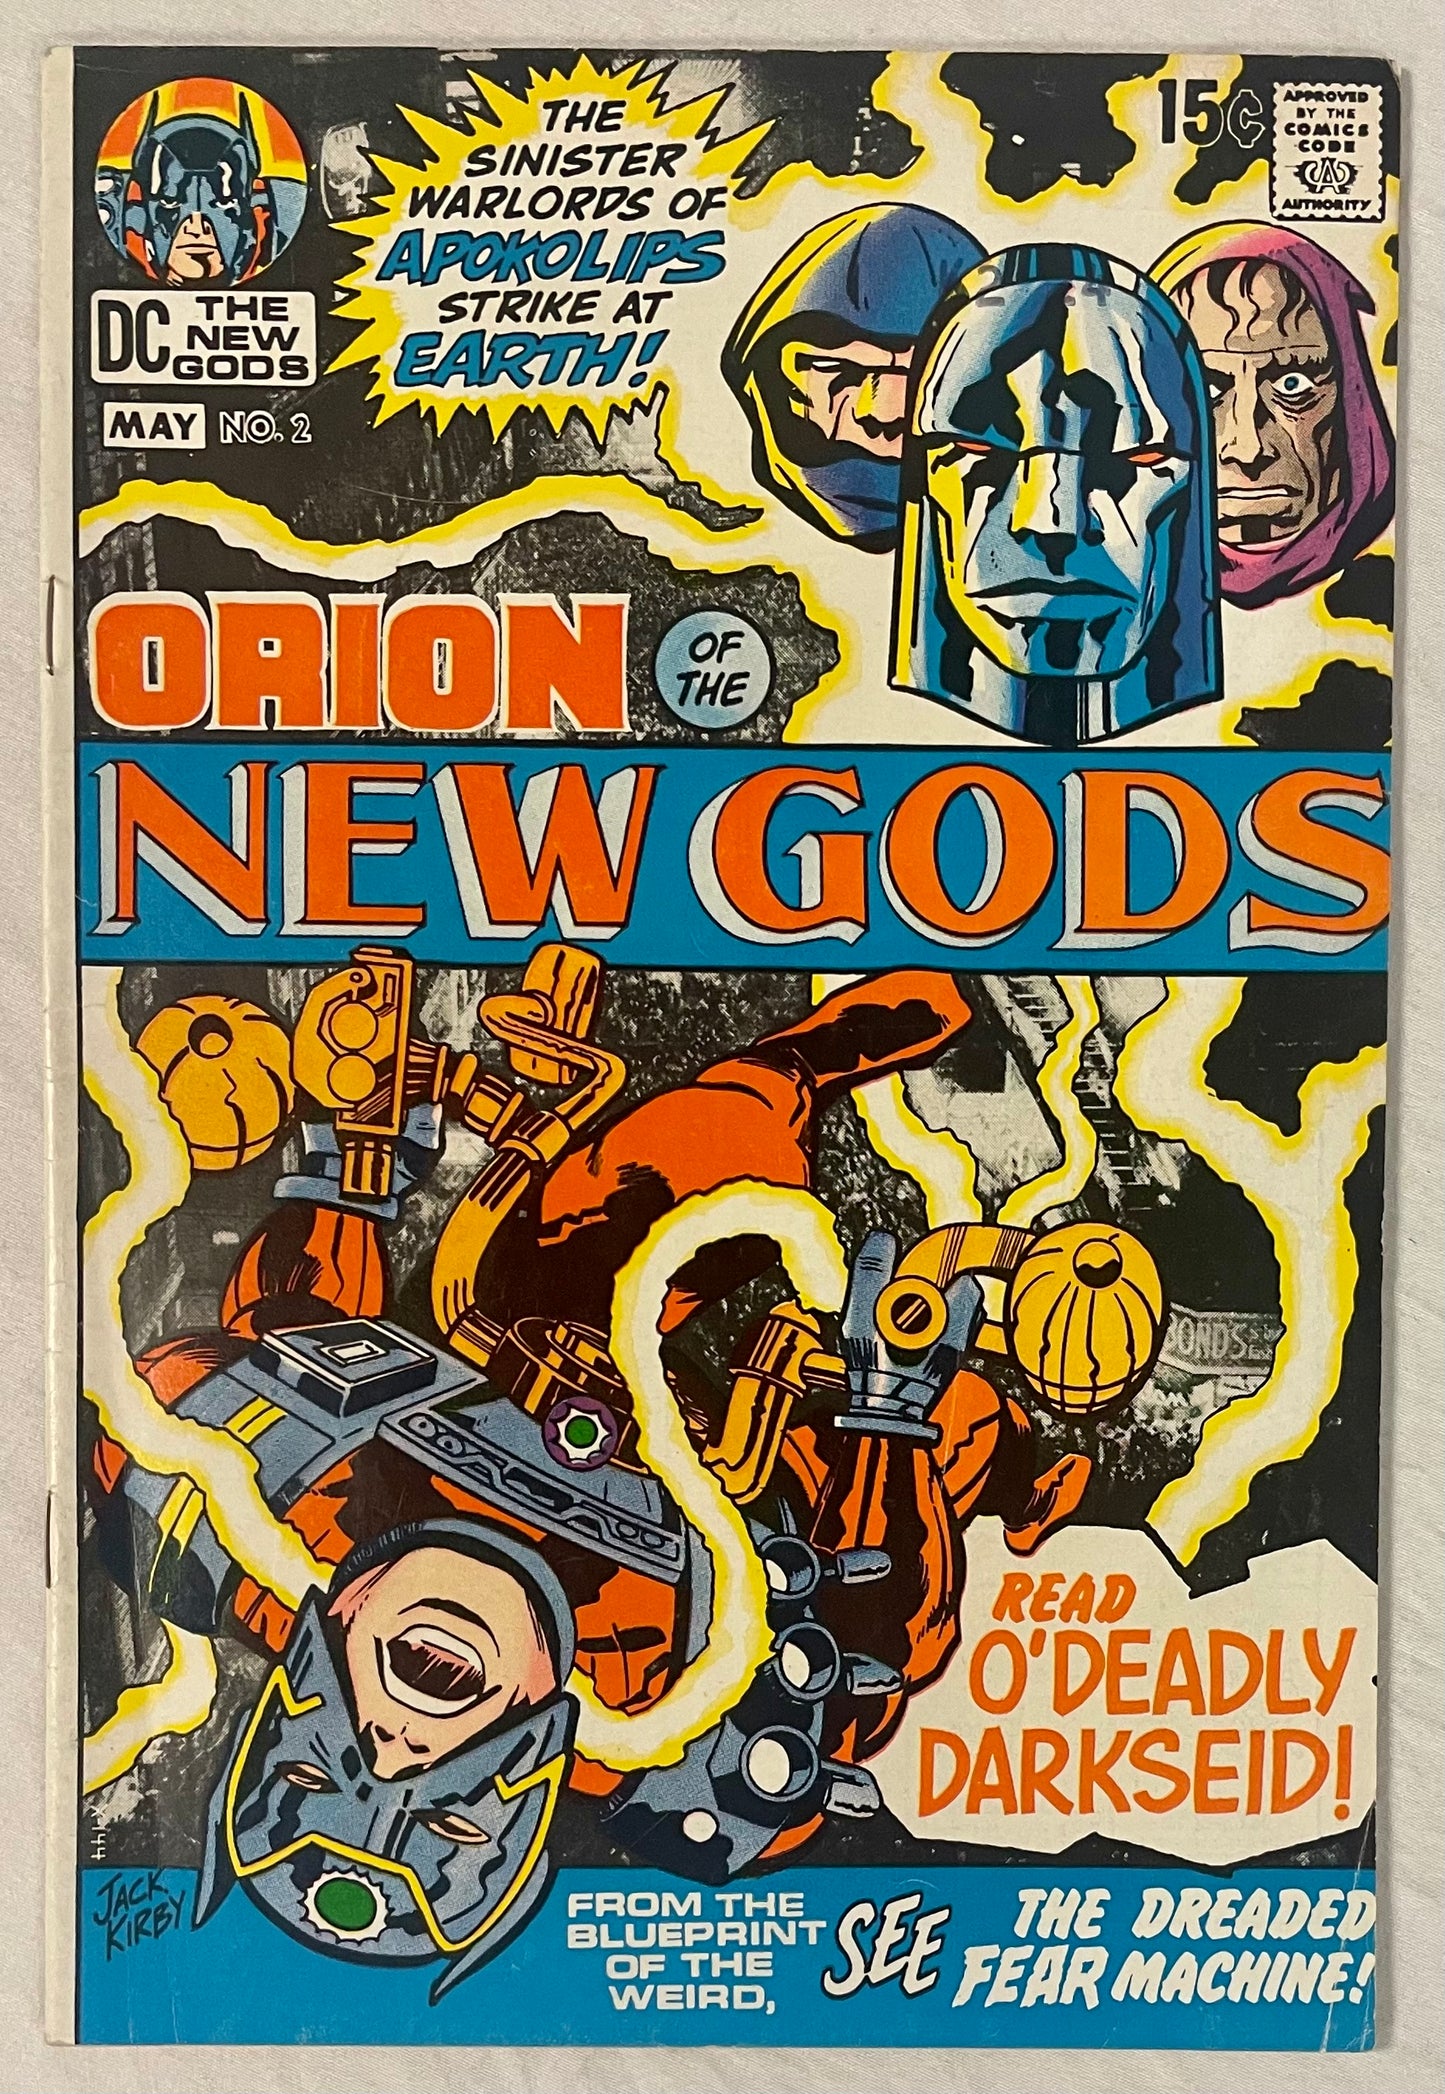 DC Comics Orion New Gods No. 2